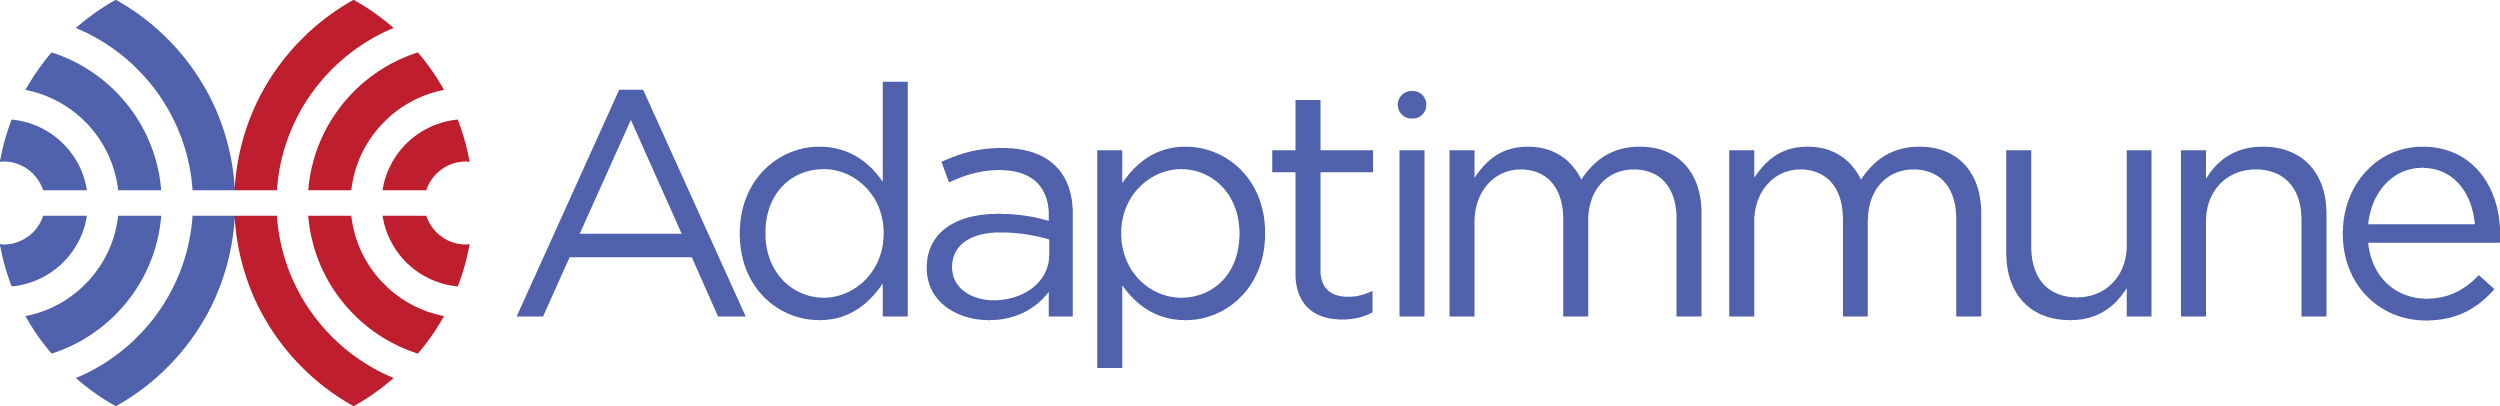 adaptimmune-logo-colour-white-background-no-strap